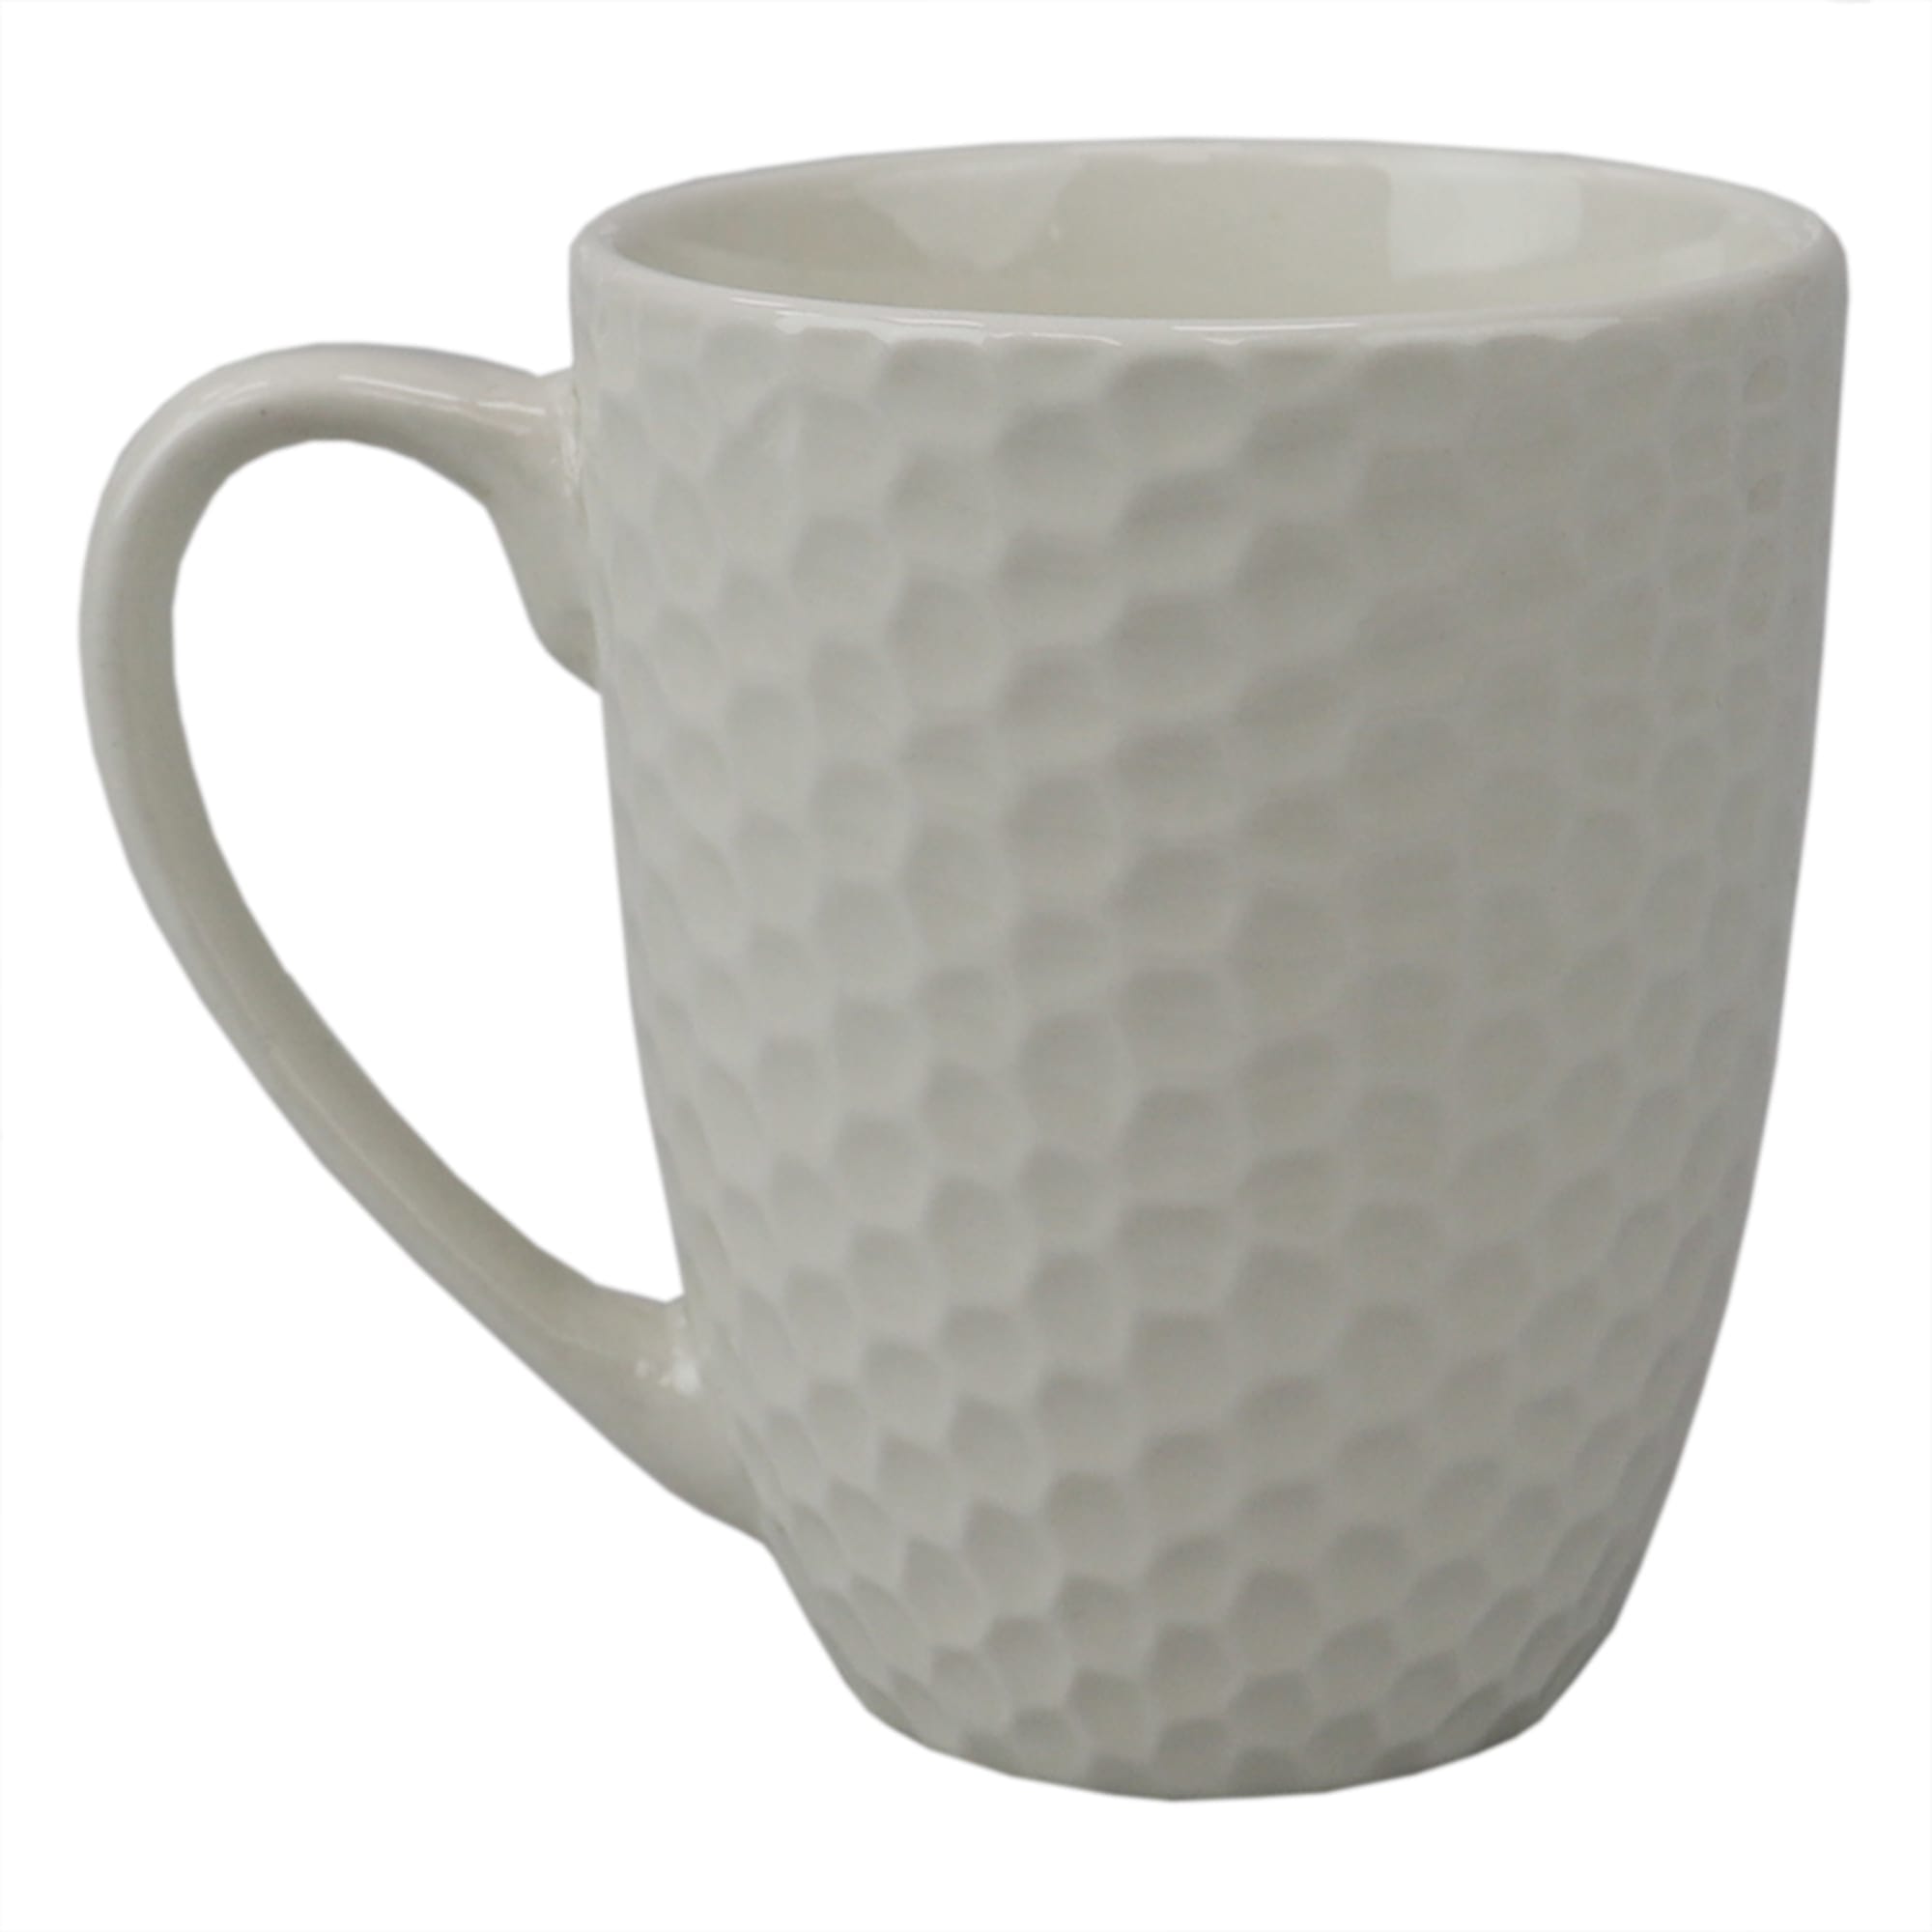 Home Basics Embossed Honeycomb 14 oz Ceramic Mug, White $2 EACH, CASE PACK OF 24